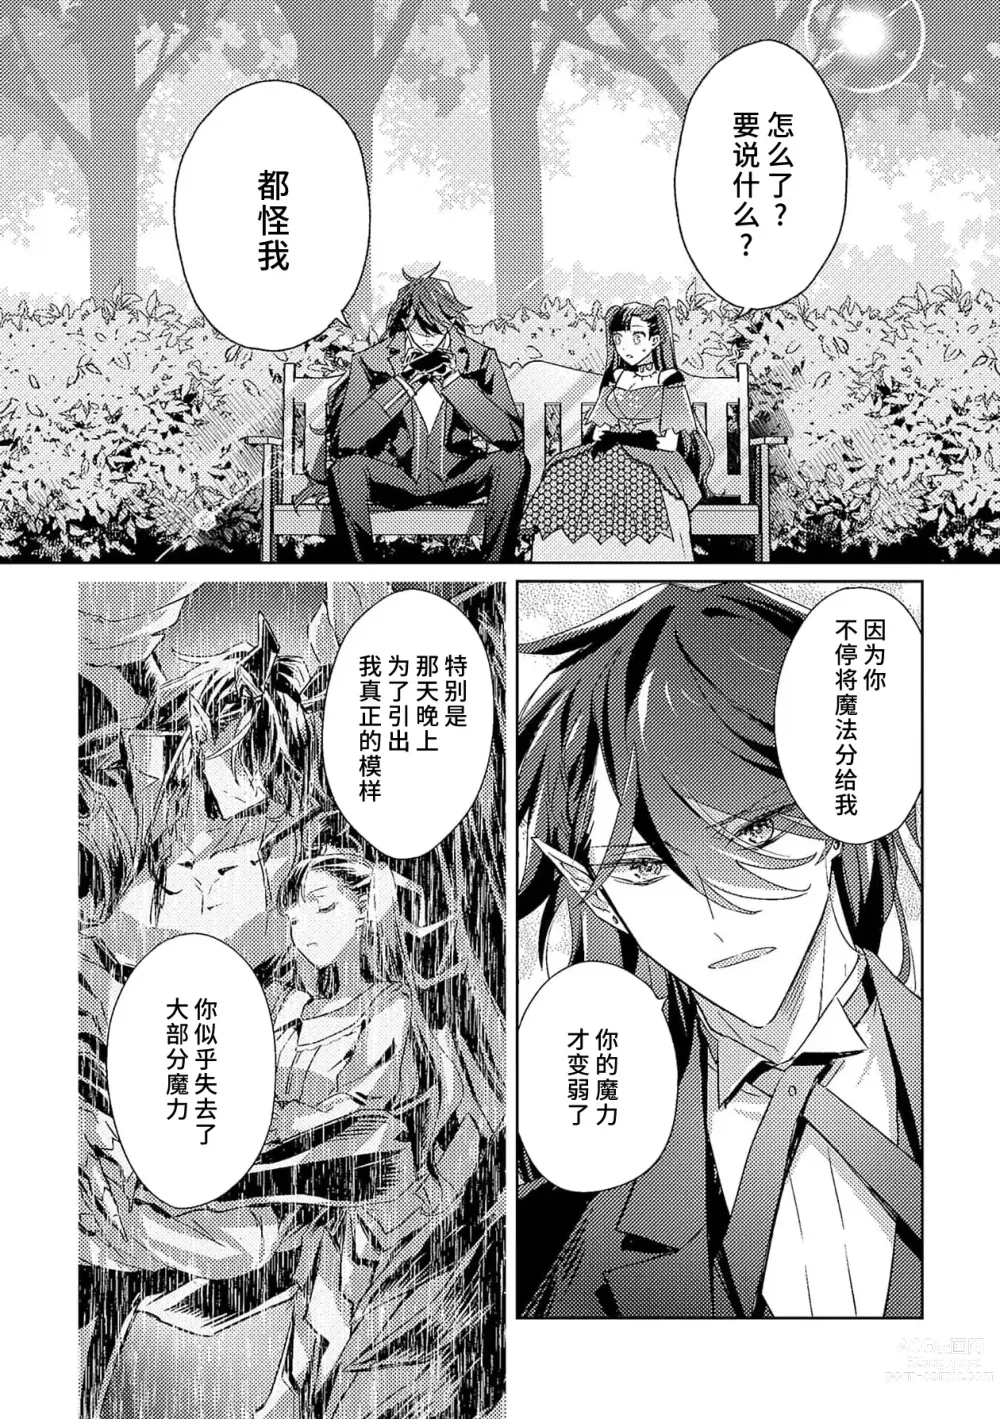 Page 103 of manga 身为恶役千金，堕落于魔界王子身下这条路线真的可以有？ 1-4